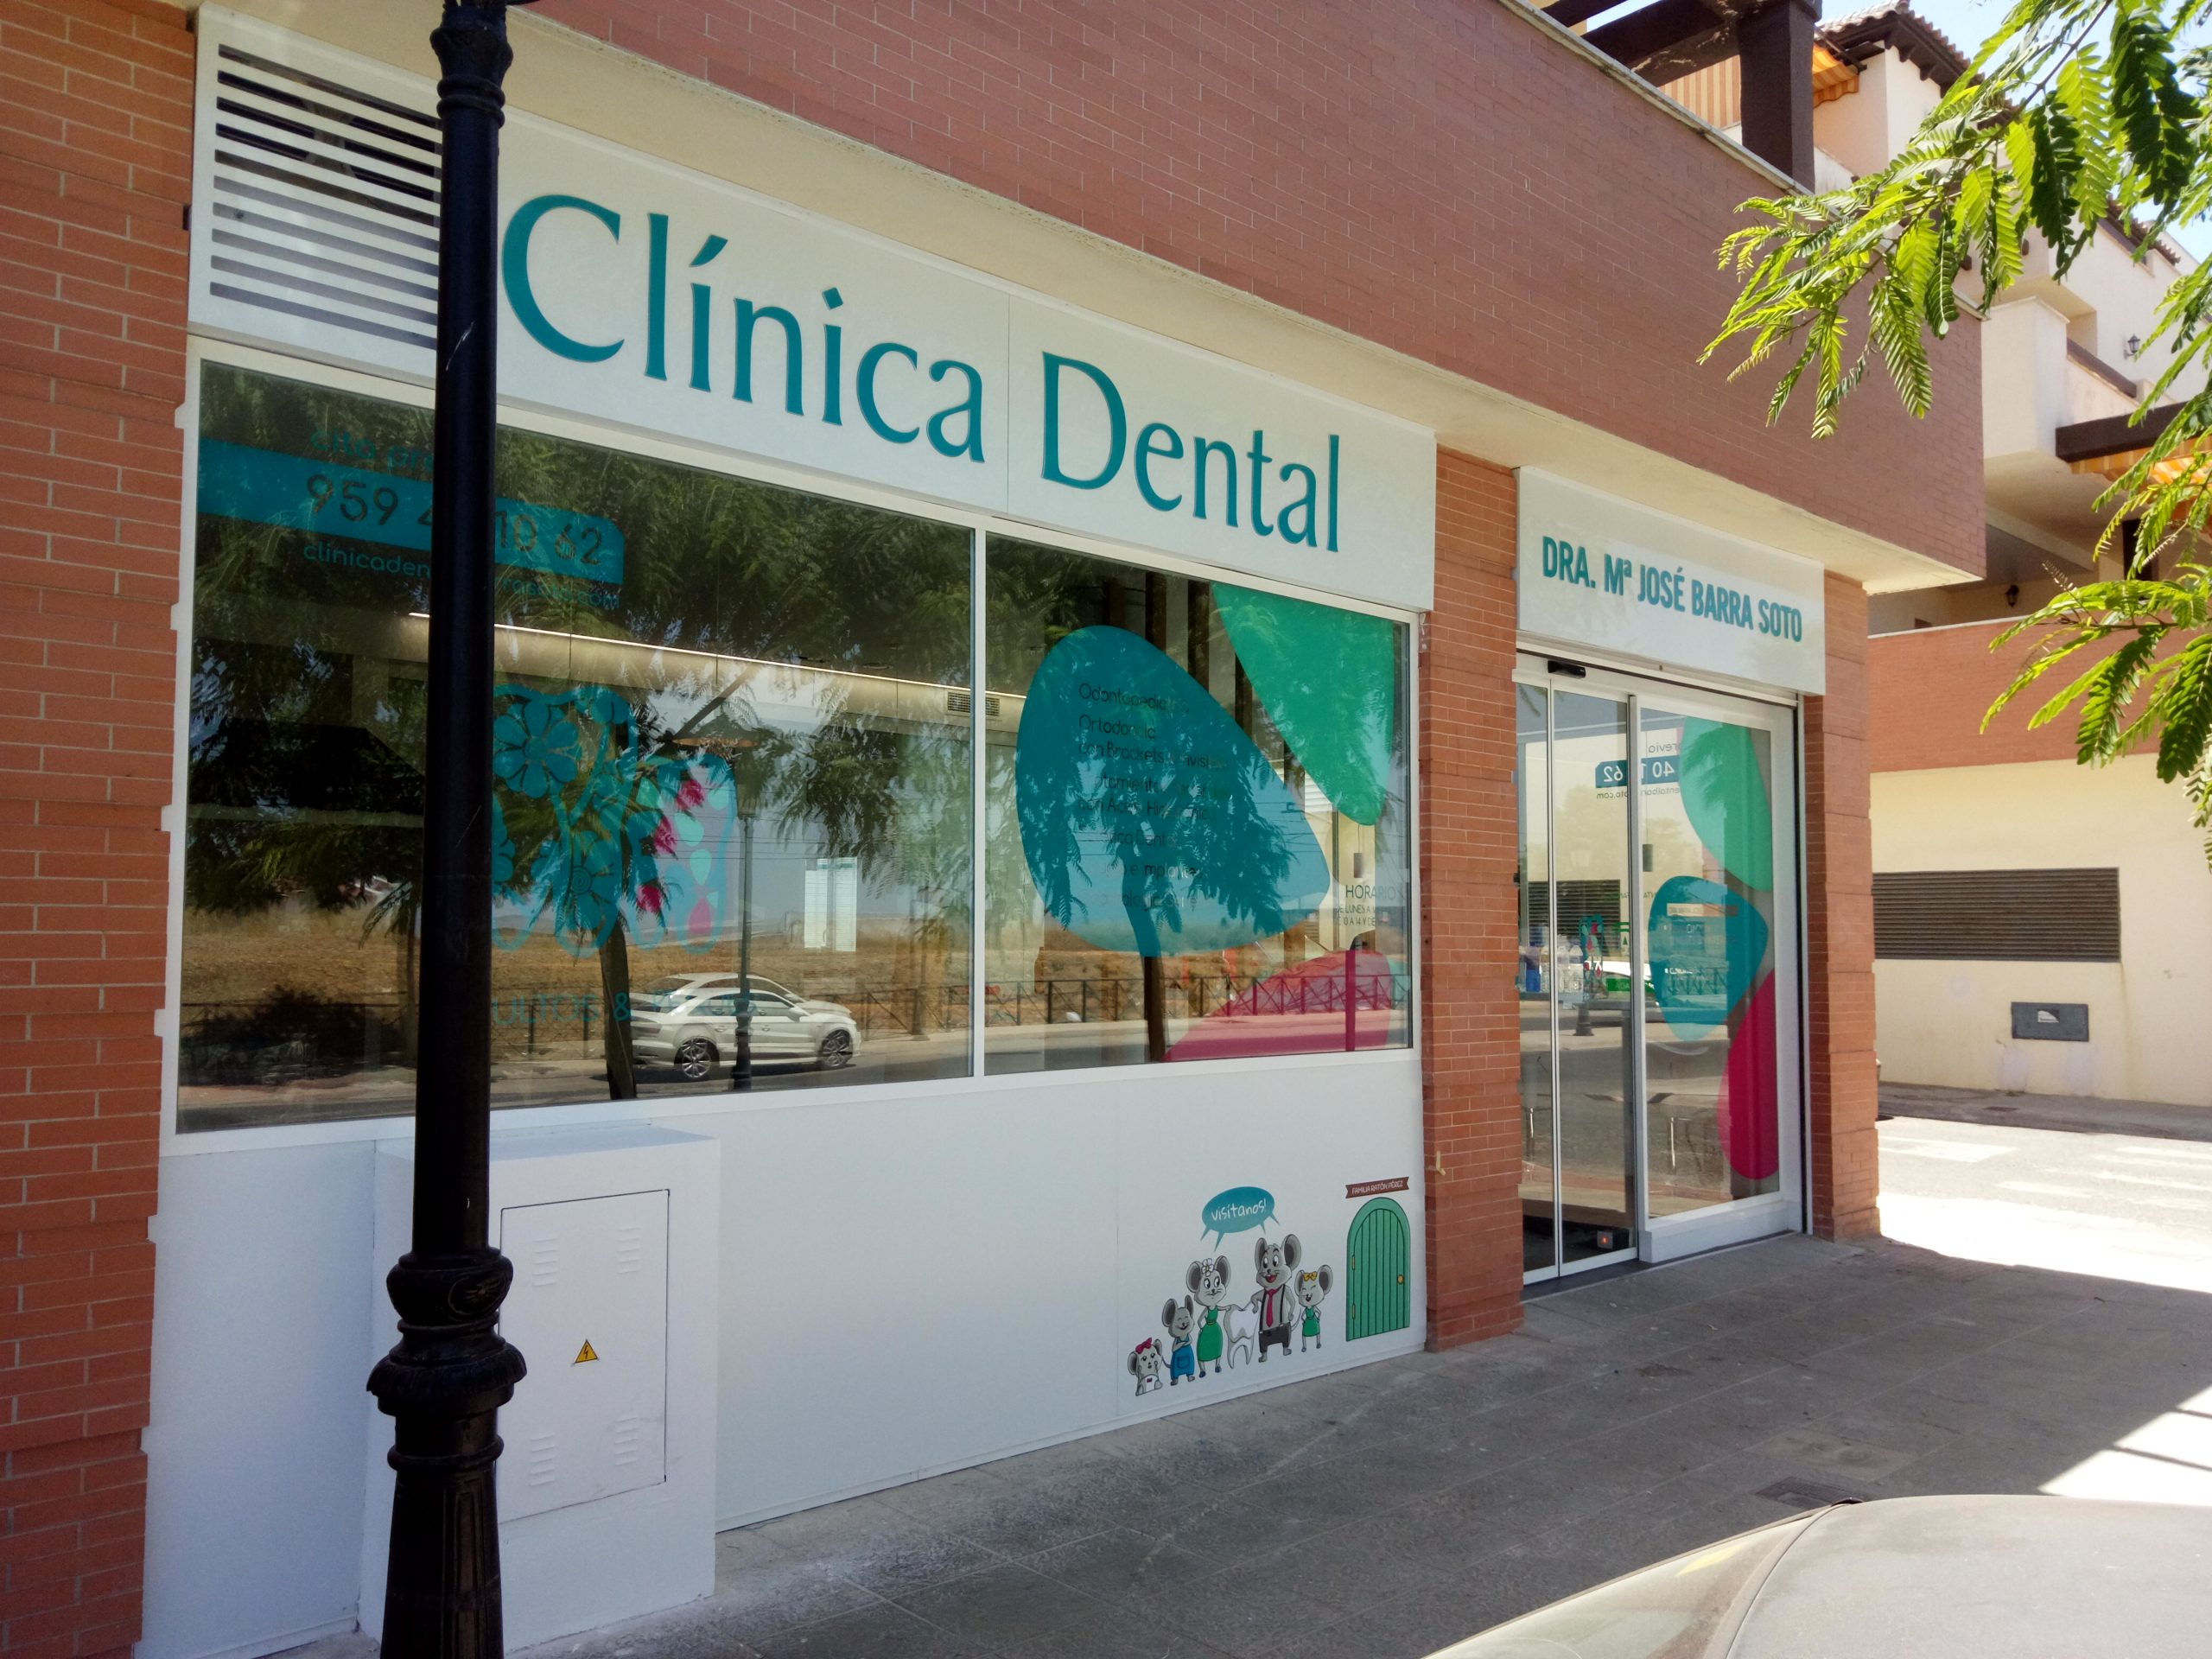 clinica dental barra soto